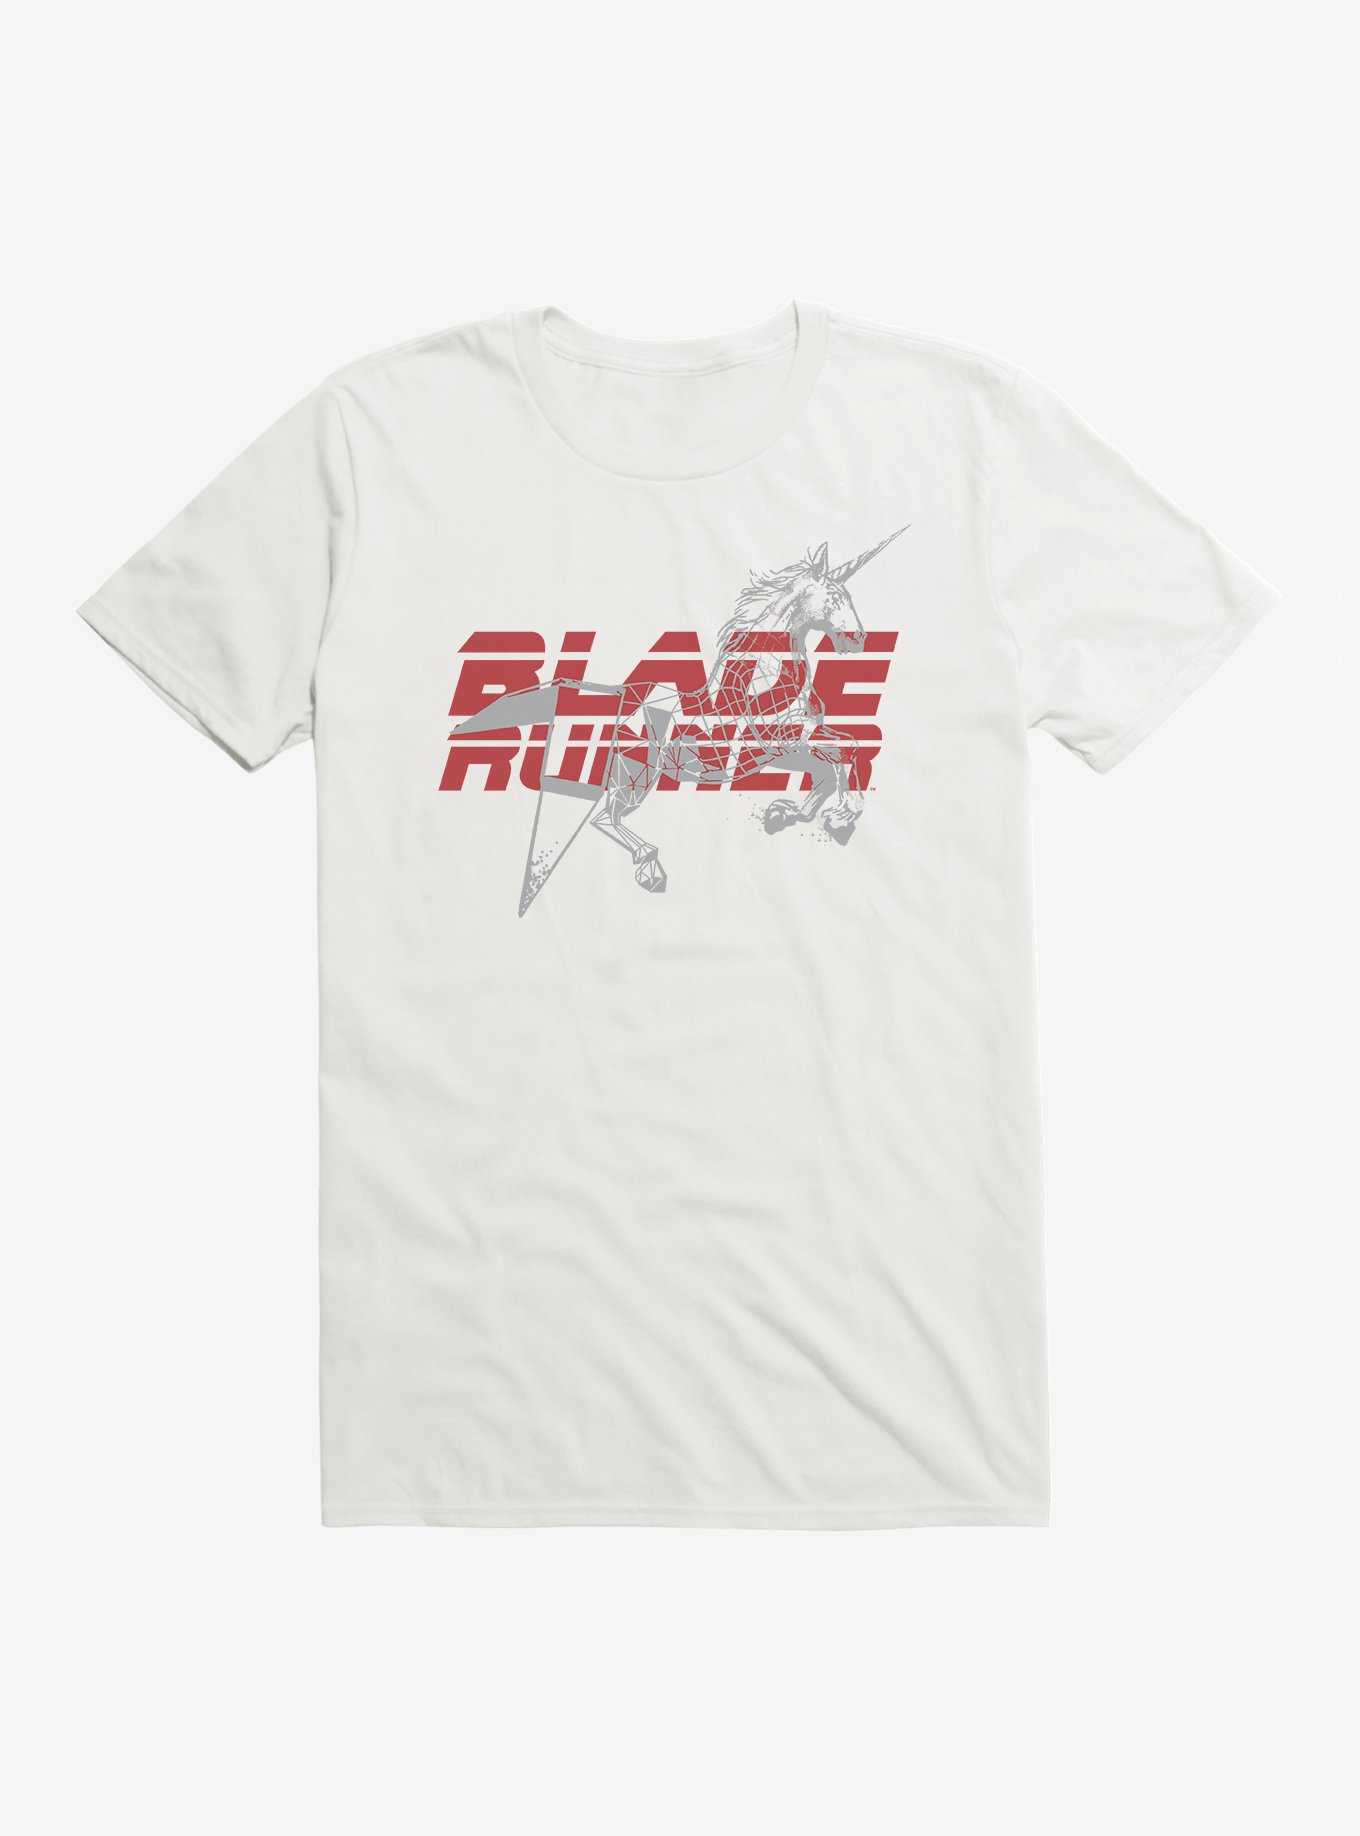 Women's Blade Runner: Black Lotus City Streets Poster T-Shirt